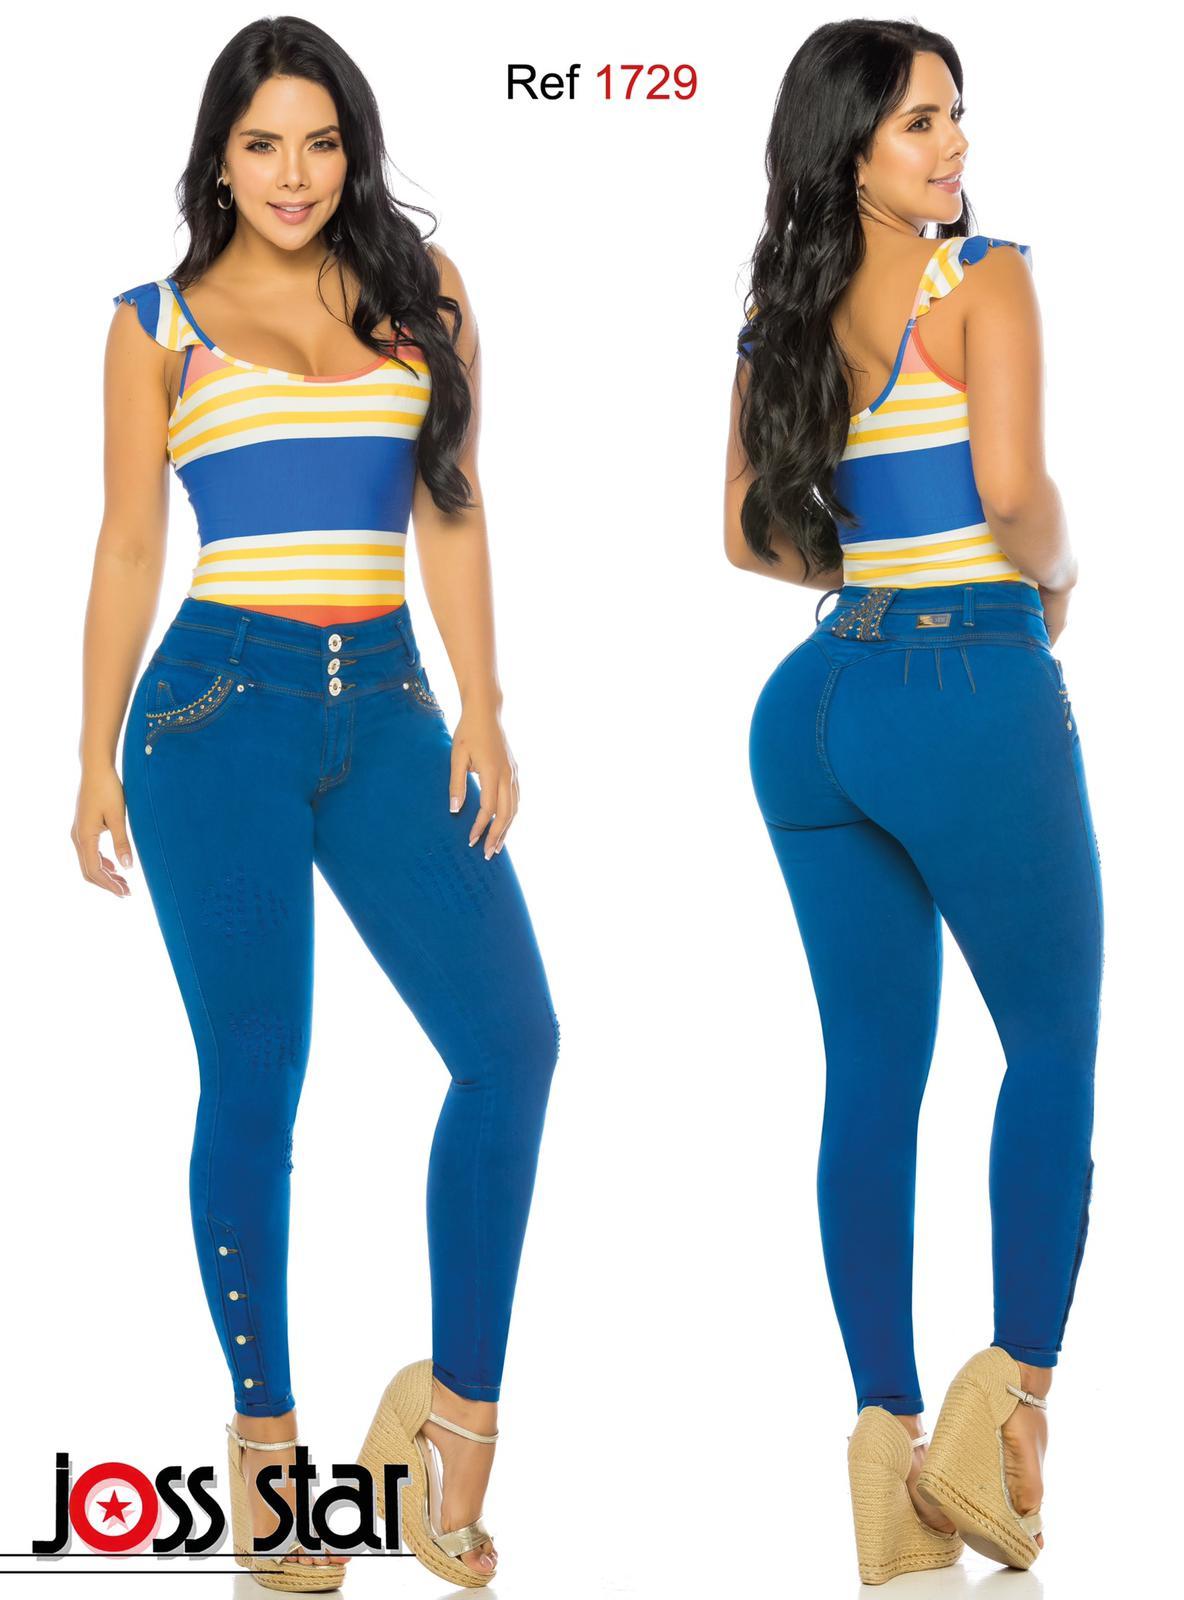 Pantalones colombianos Joss Star ☎ 600 28 16 20 [PRECIOS BARATOS]